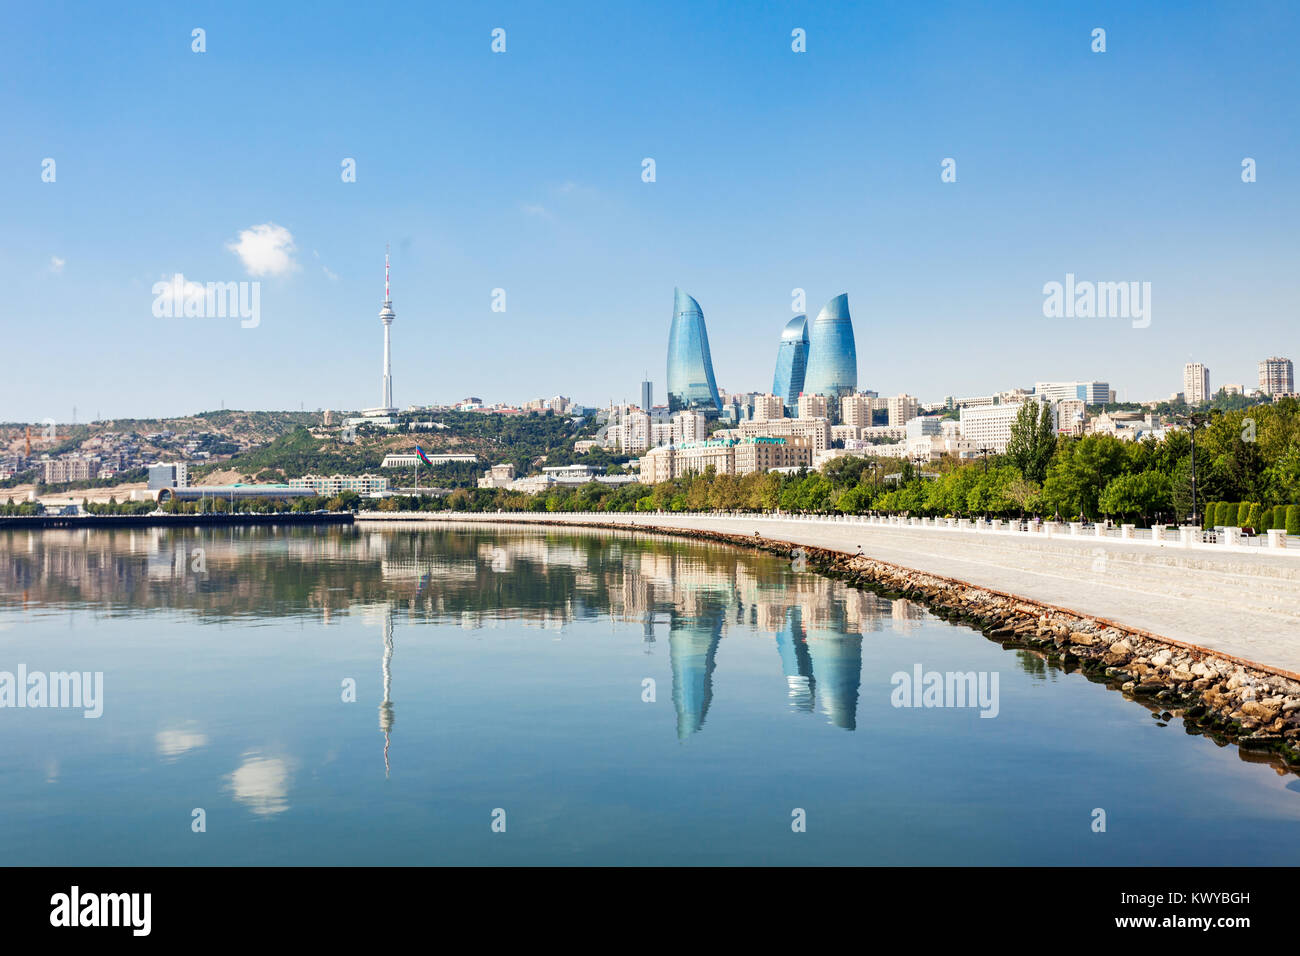 Baky skyline view from Baku boulevard (the Caspian Sea embankment). Baku is the capital and largest city of Azerbaijan and of the Caucasus region. Stock Photo